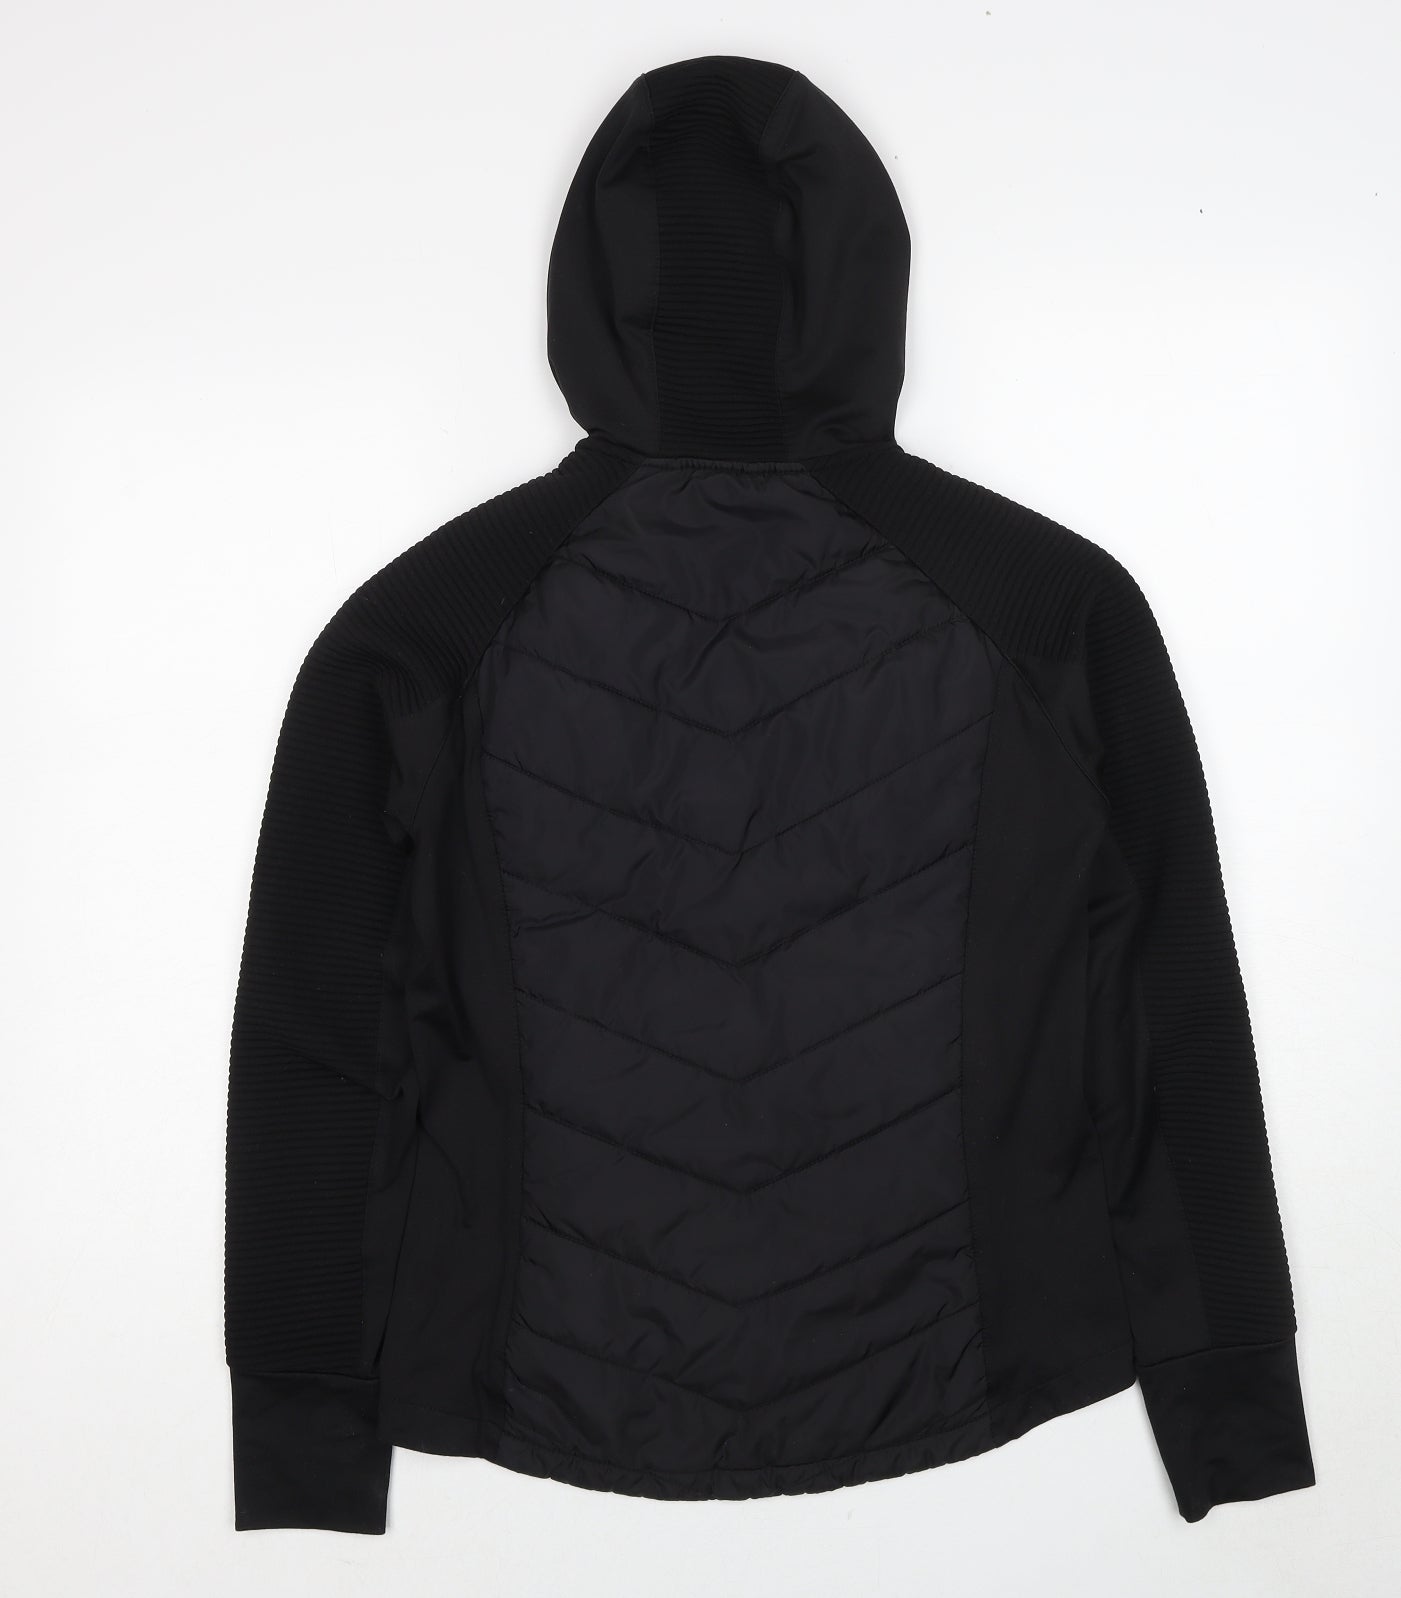 H&M Womens Black Puffer Jacket Coat Size S Zip